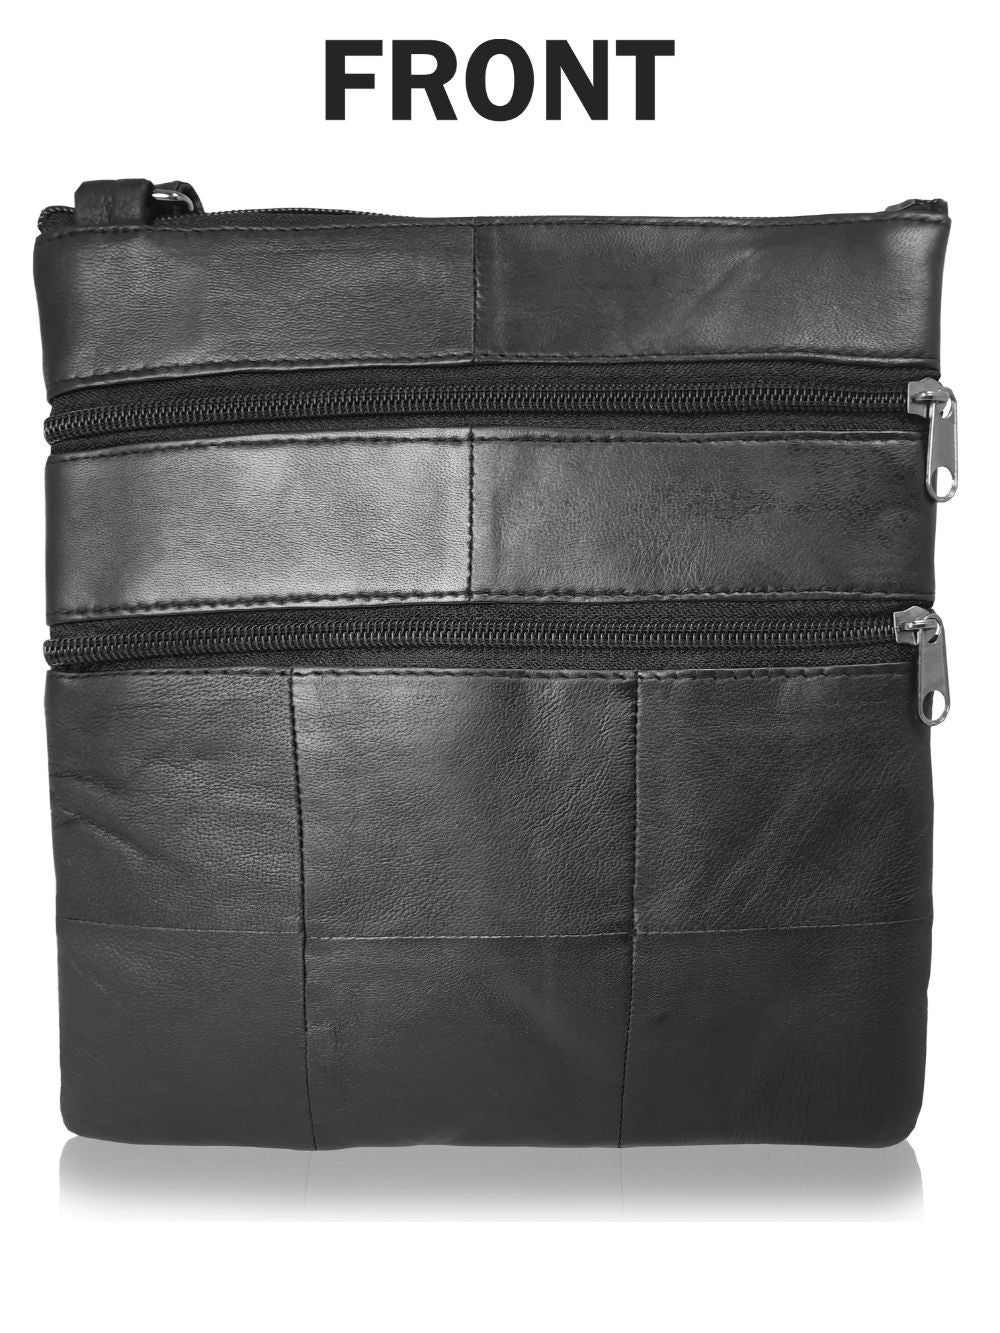 Roamlite Mens Travel pouch black leather RL178 front